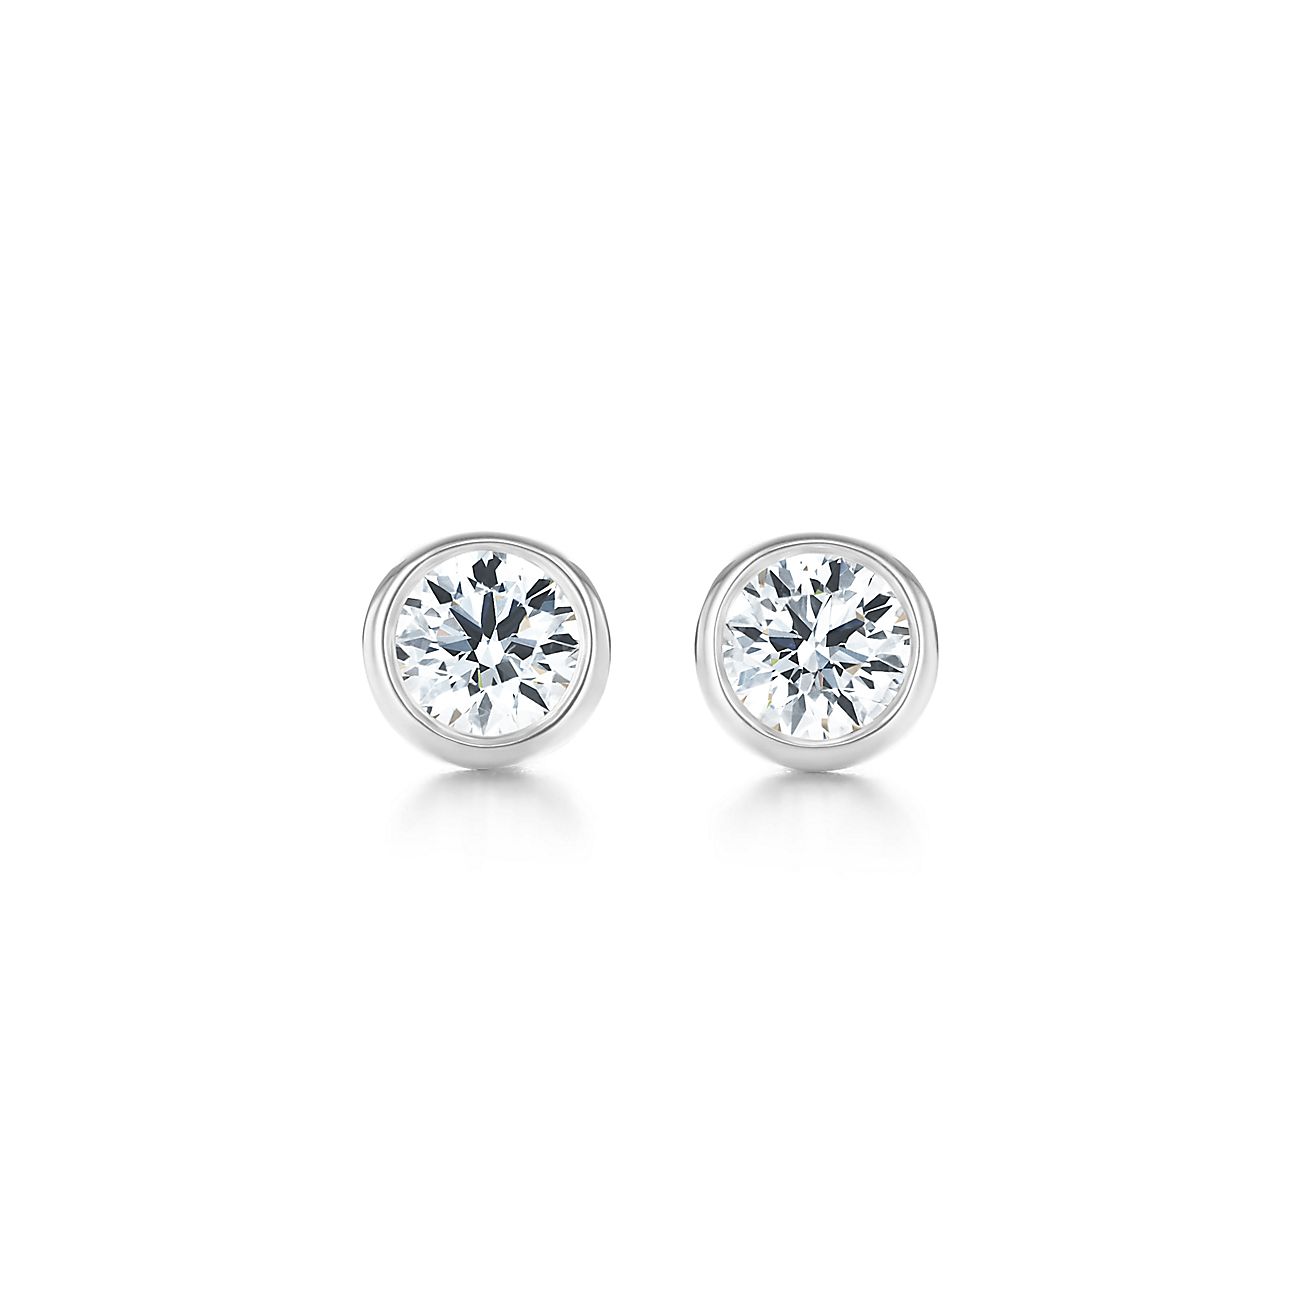 Elsa Peretti® Diamonds by the Yard® earrings in platinum.